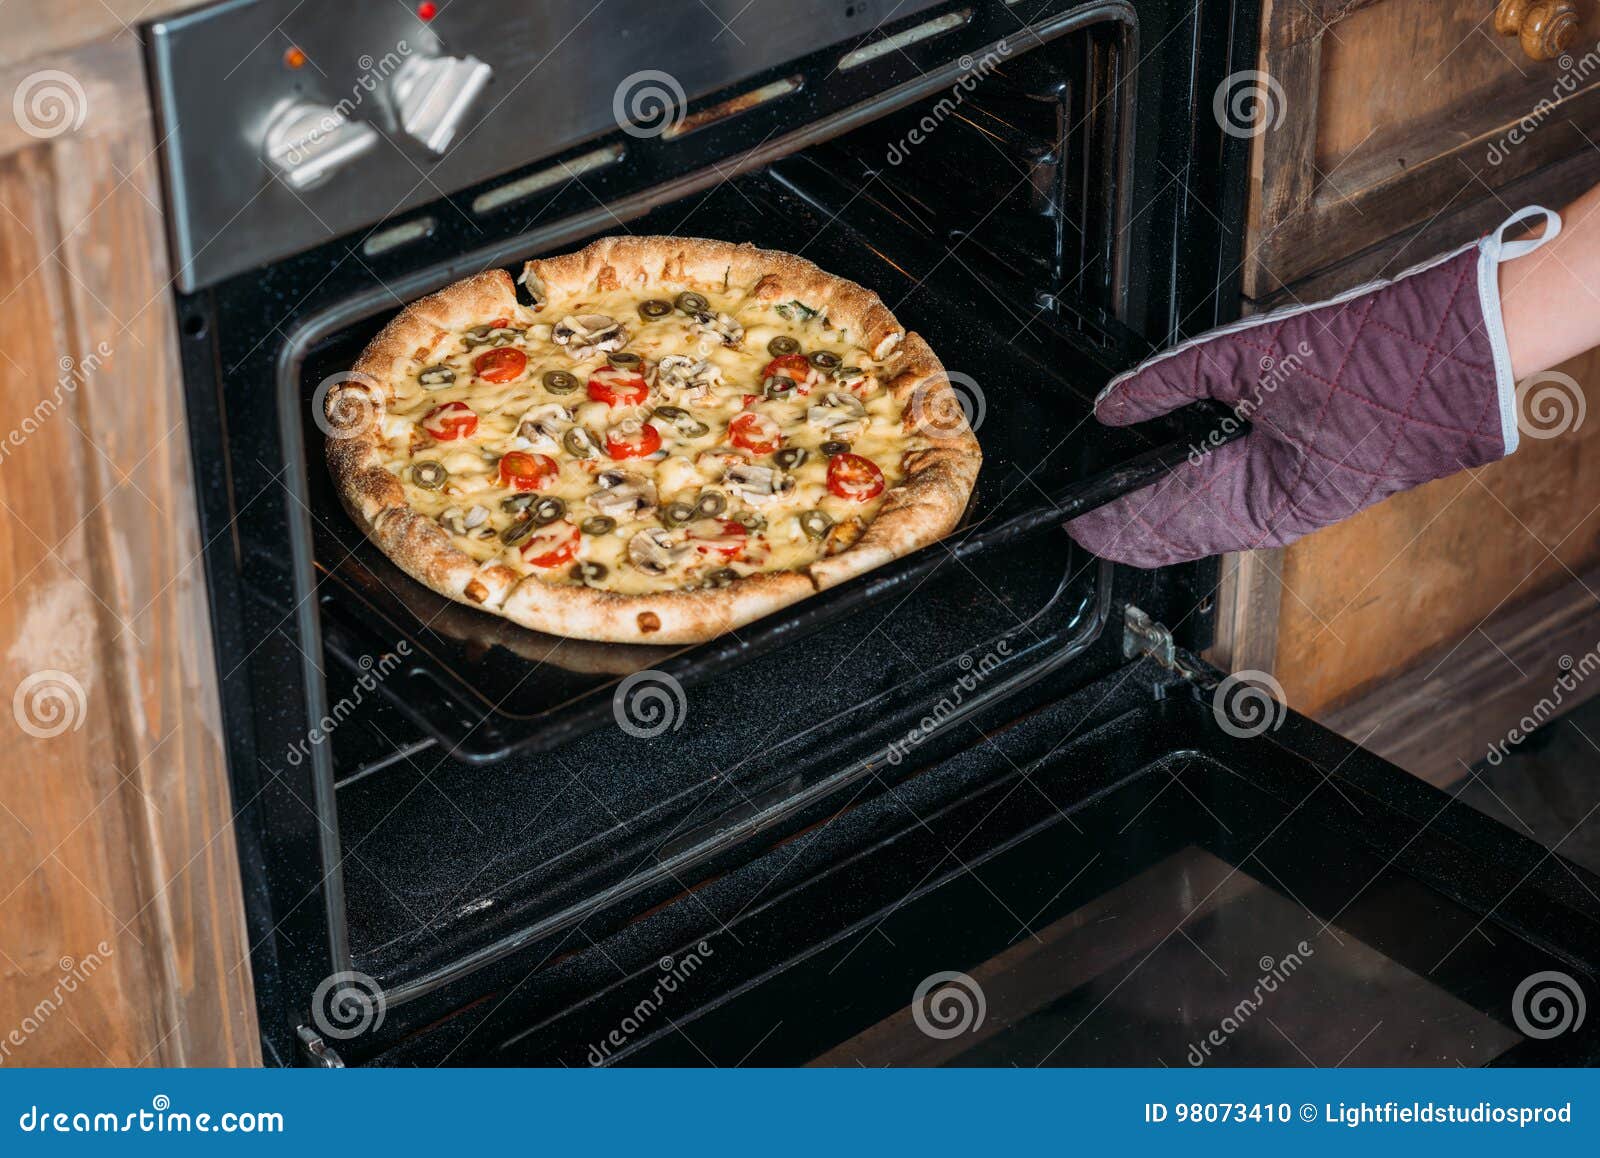 блюда в духовке пицца фото 117